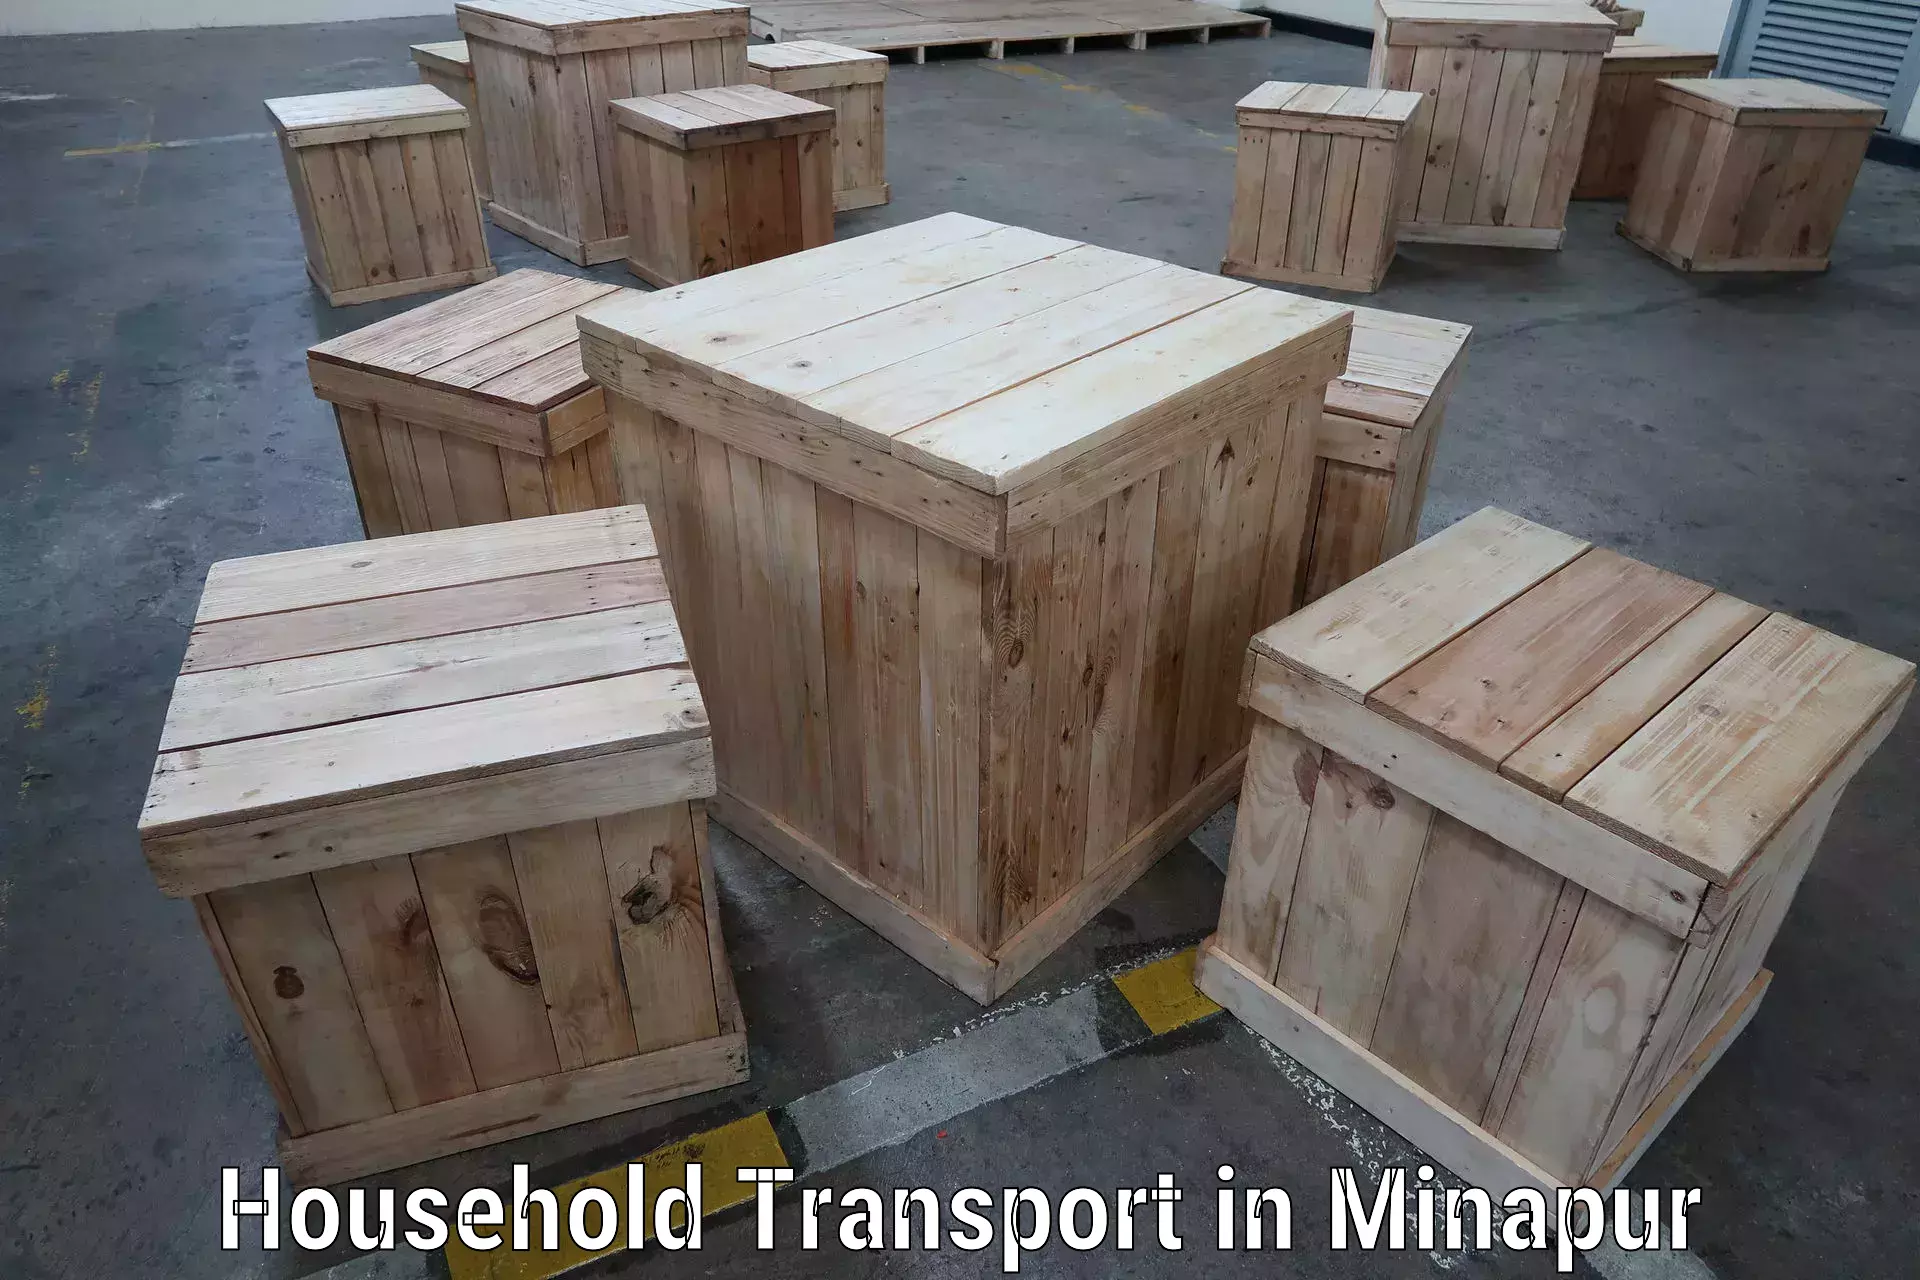 Household goods transport service in Minapur